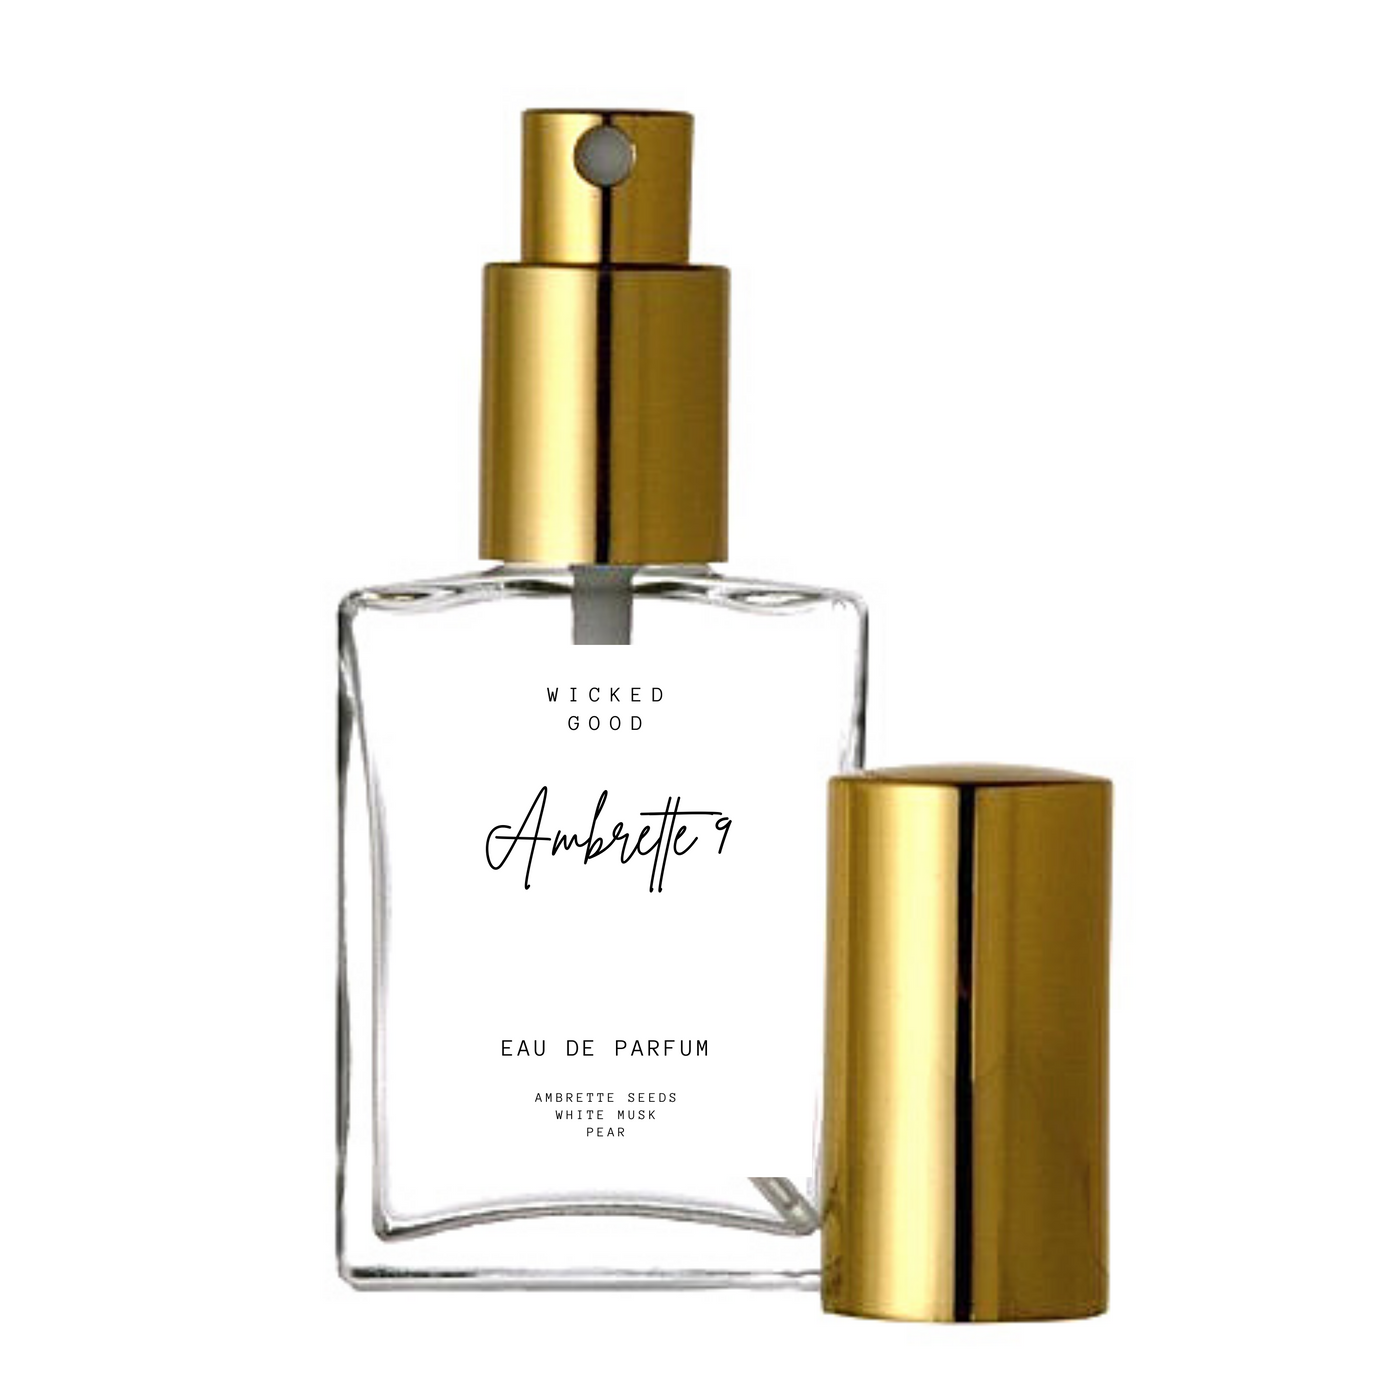 Ambrette 9 Fragrance Le Labo Type | Order A Sample Here